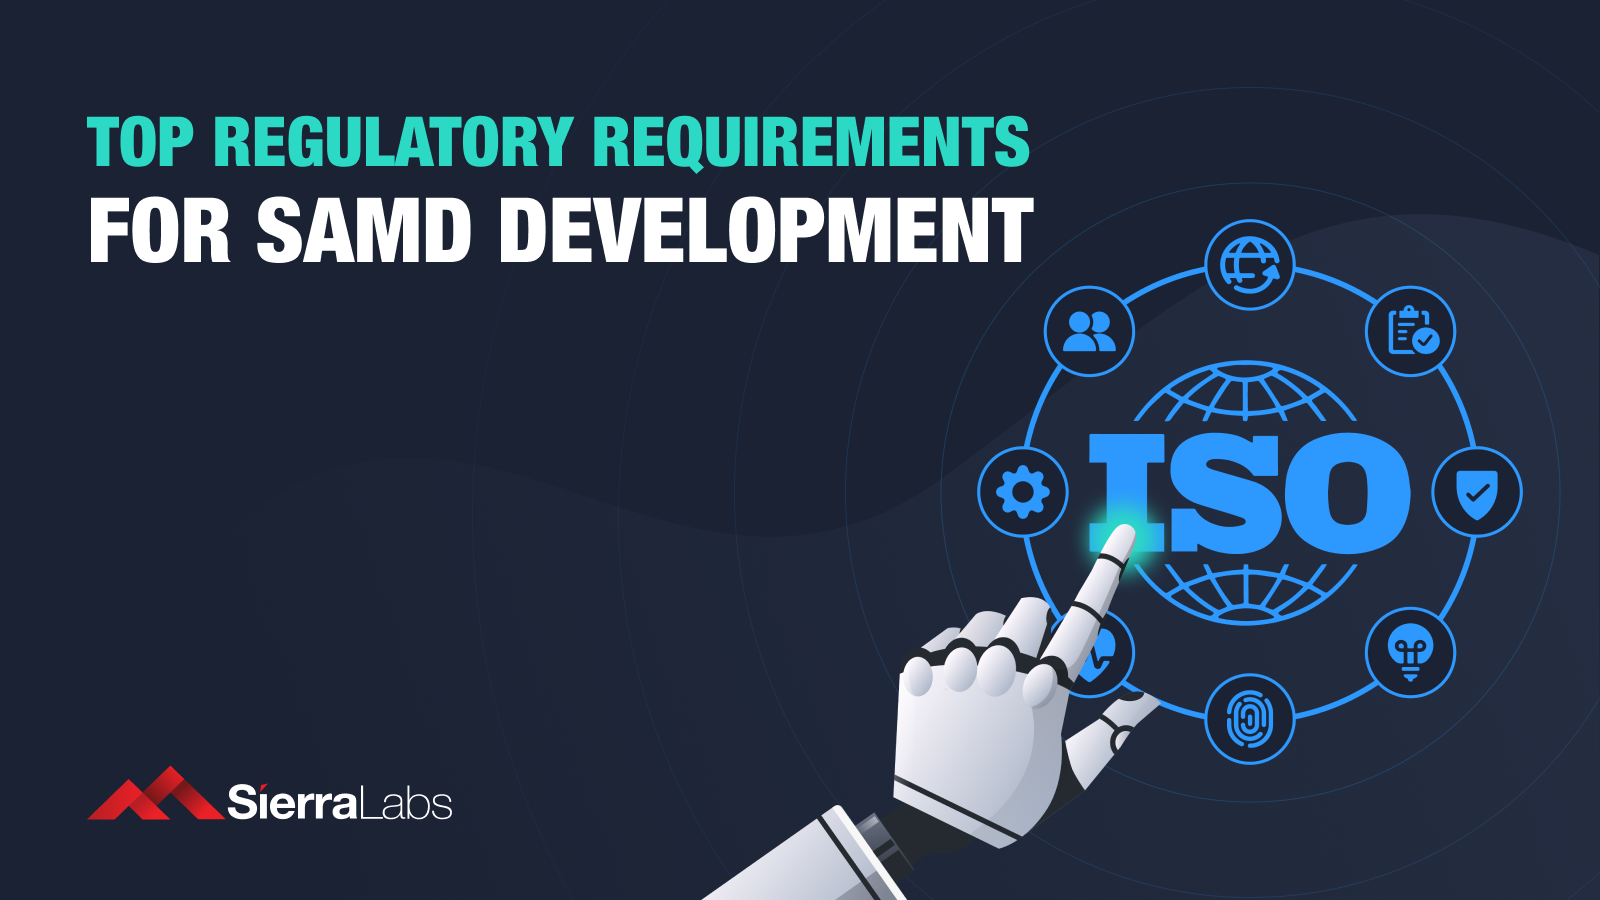 Top 3 Regulatory Requirements for SaMD Development